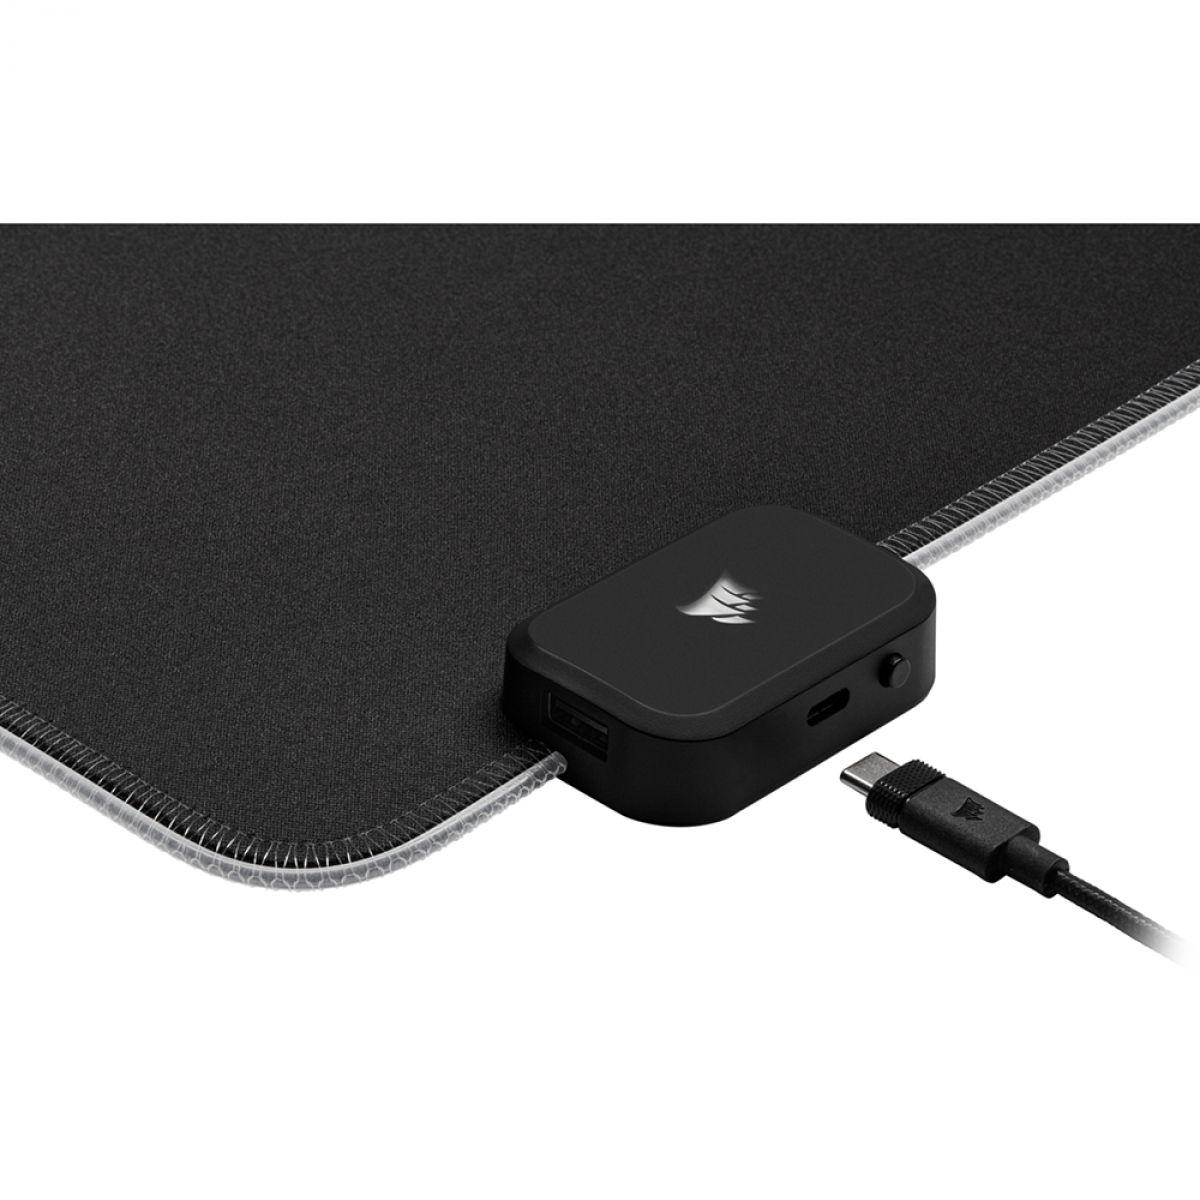 Mousepad Gamer Corsair MM700 Extended, RGB, black, 930x400mm, CH-9417070-WW  